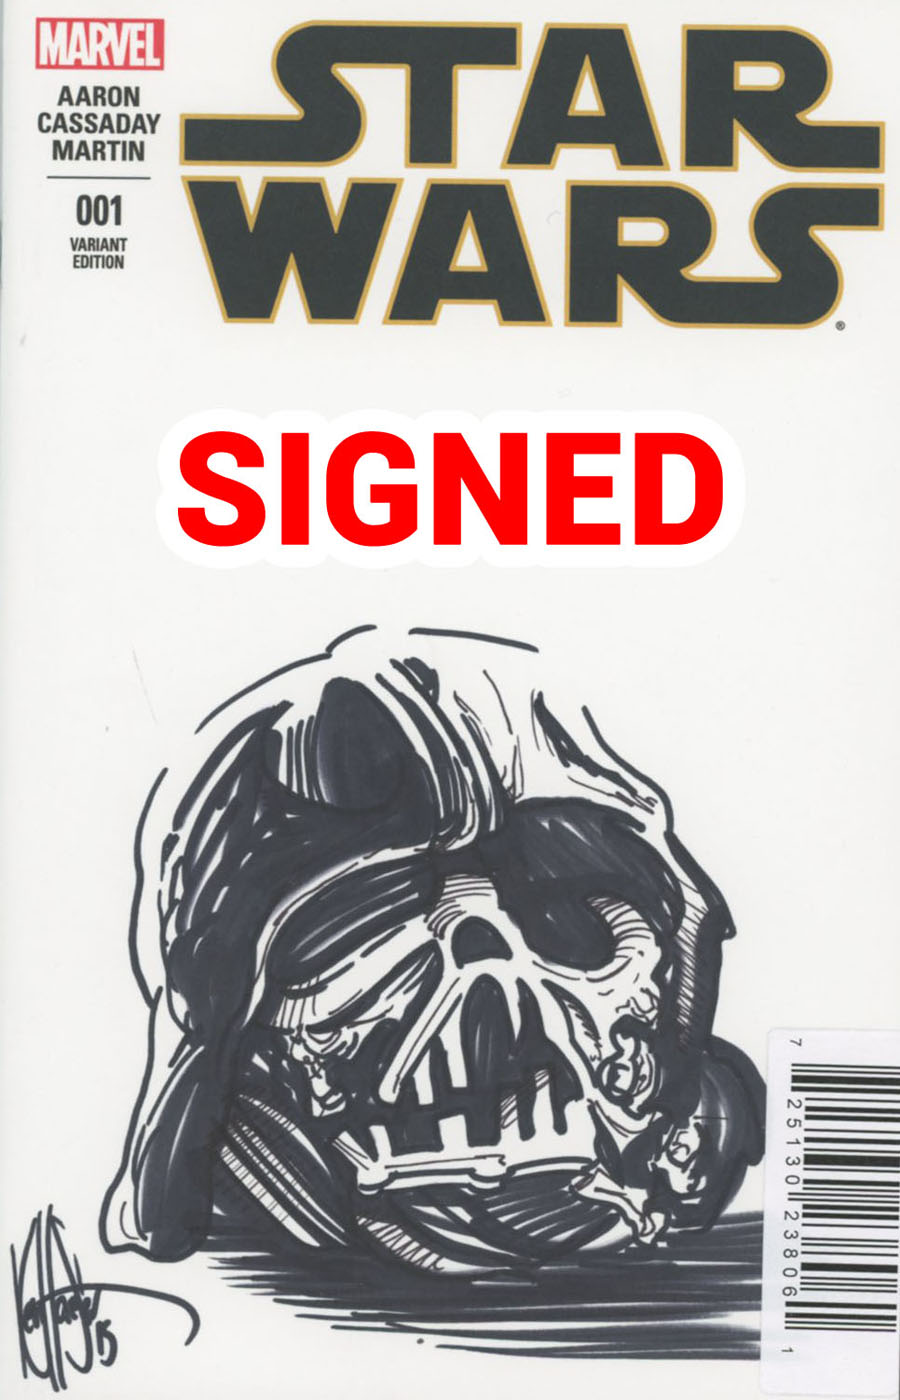 Star Wars Vol 4 #1 Cover Z-Z-V DF Ken Haeser Signed & Remarked With A Darth Vader Crushed Helmet Hand-Drawn Sketch Variant Cover